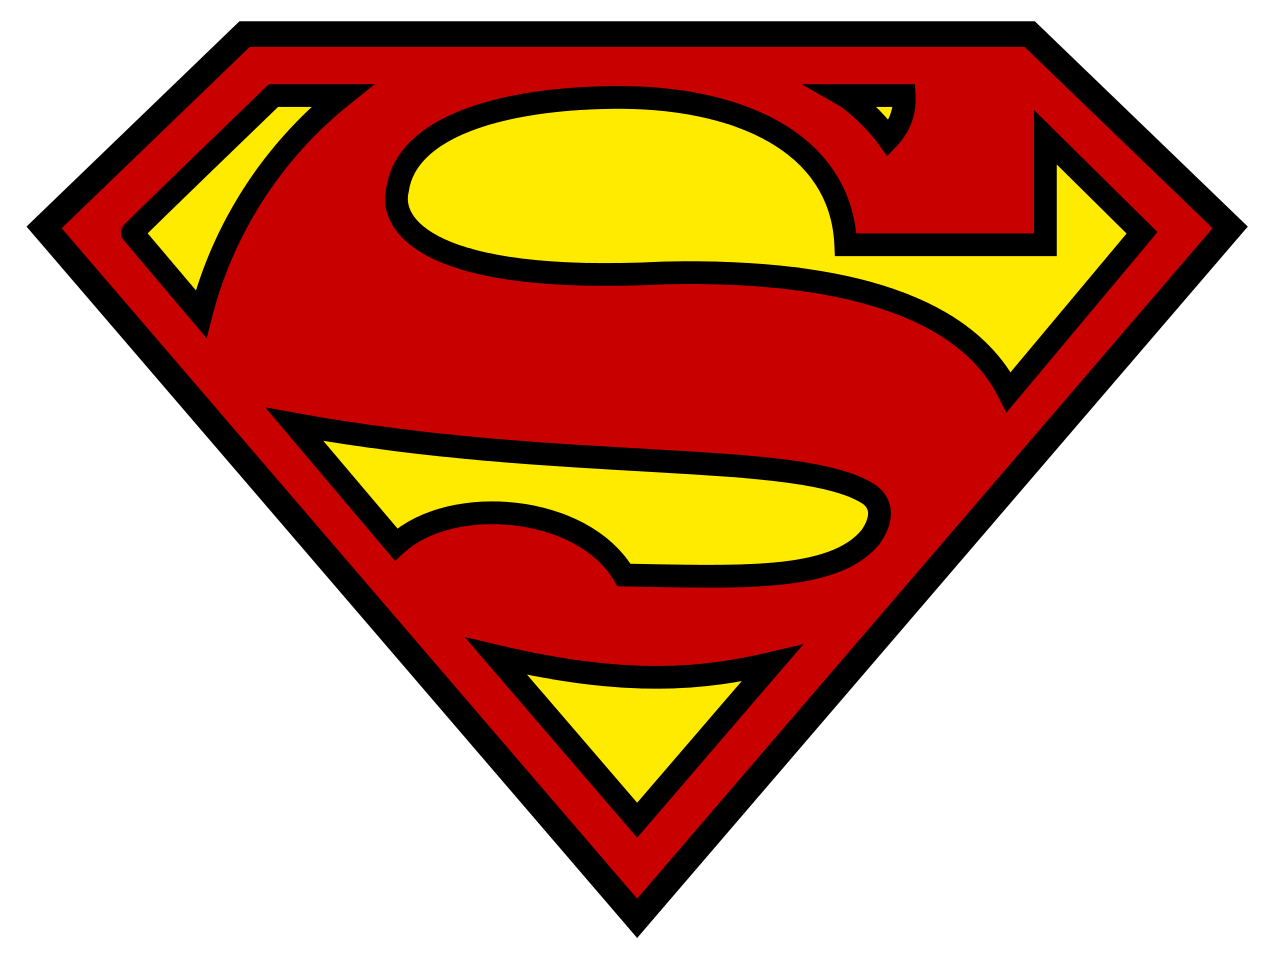 Superman Logo Wallpaper, Superman Logo Image for Windows and Mac